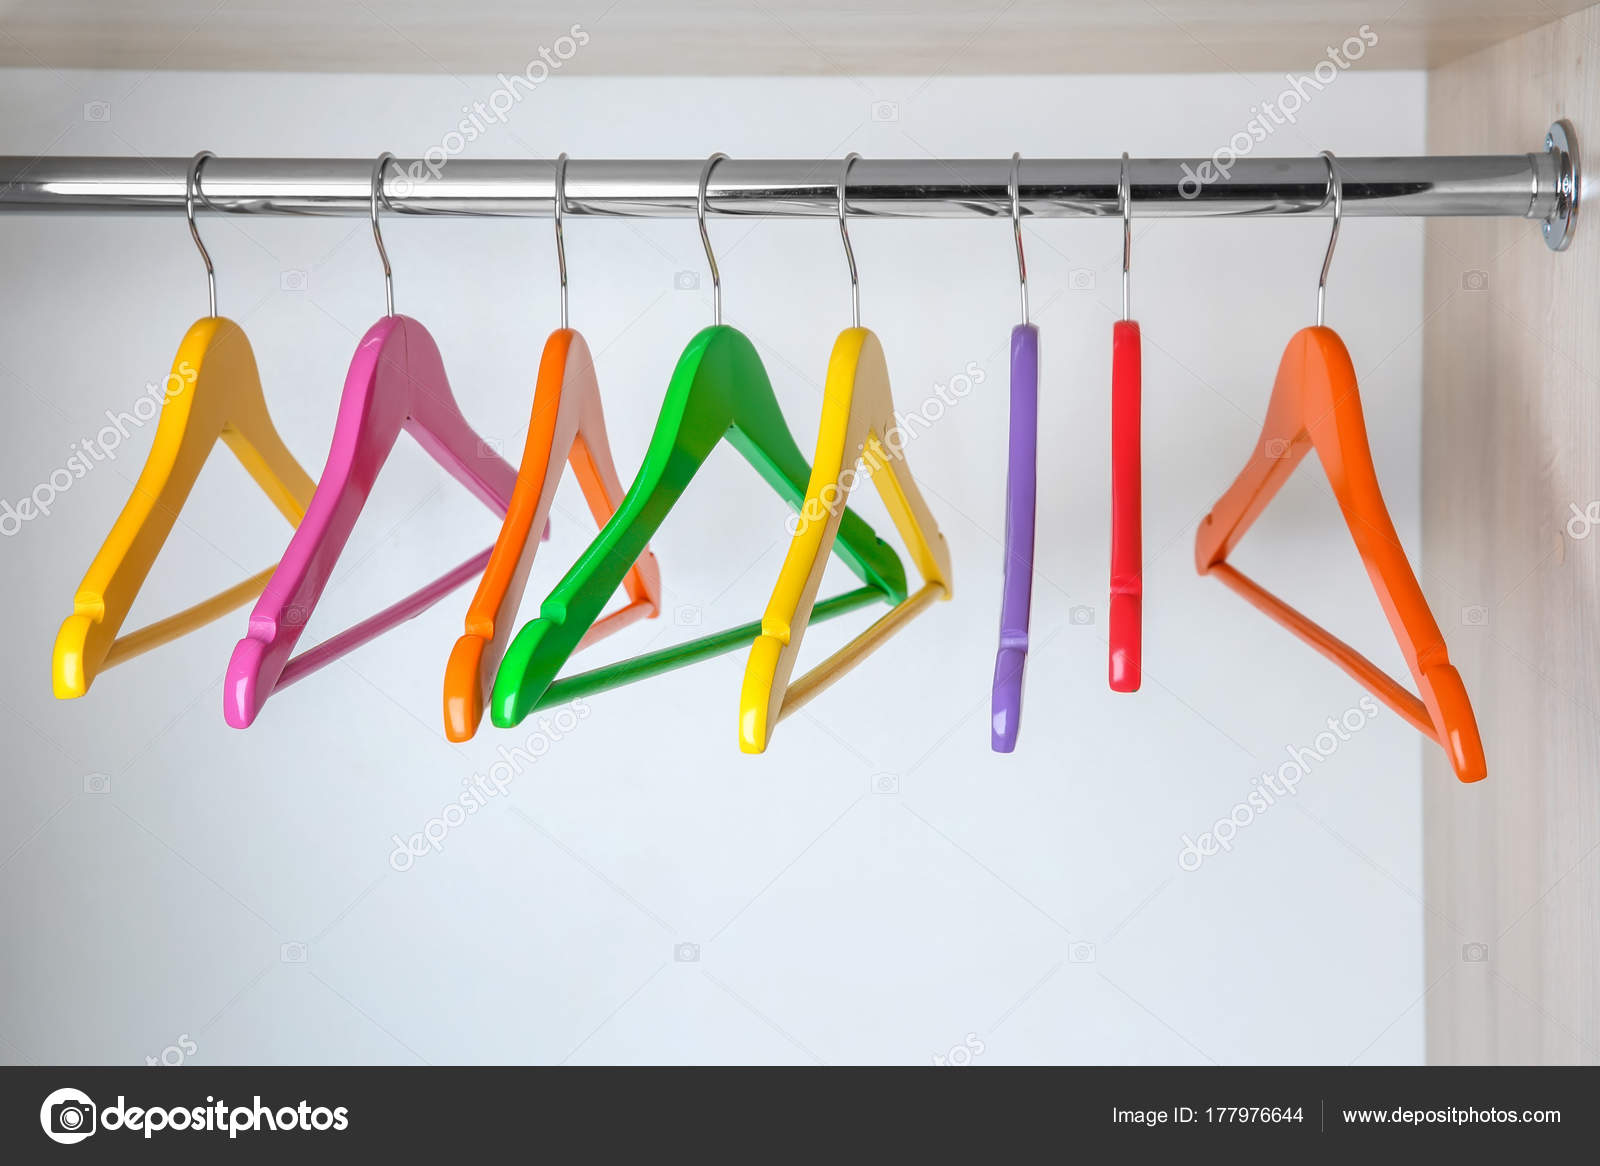 https://st3.depositphotos.com/1177973/17797/i/1600/depositphotos_177976644-stock-photo-colorful-clothes-hangers-in-empty.jpg